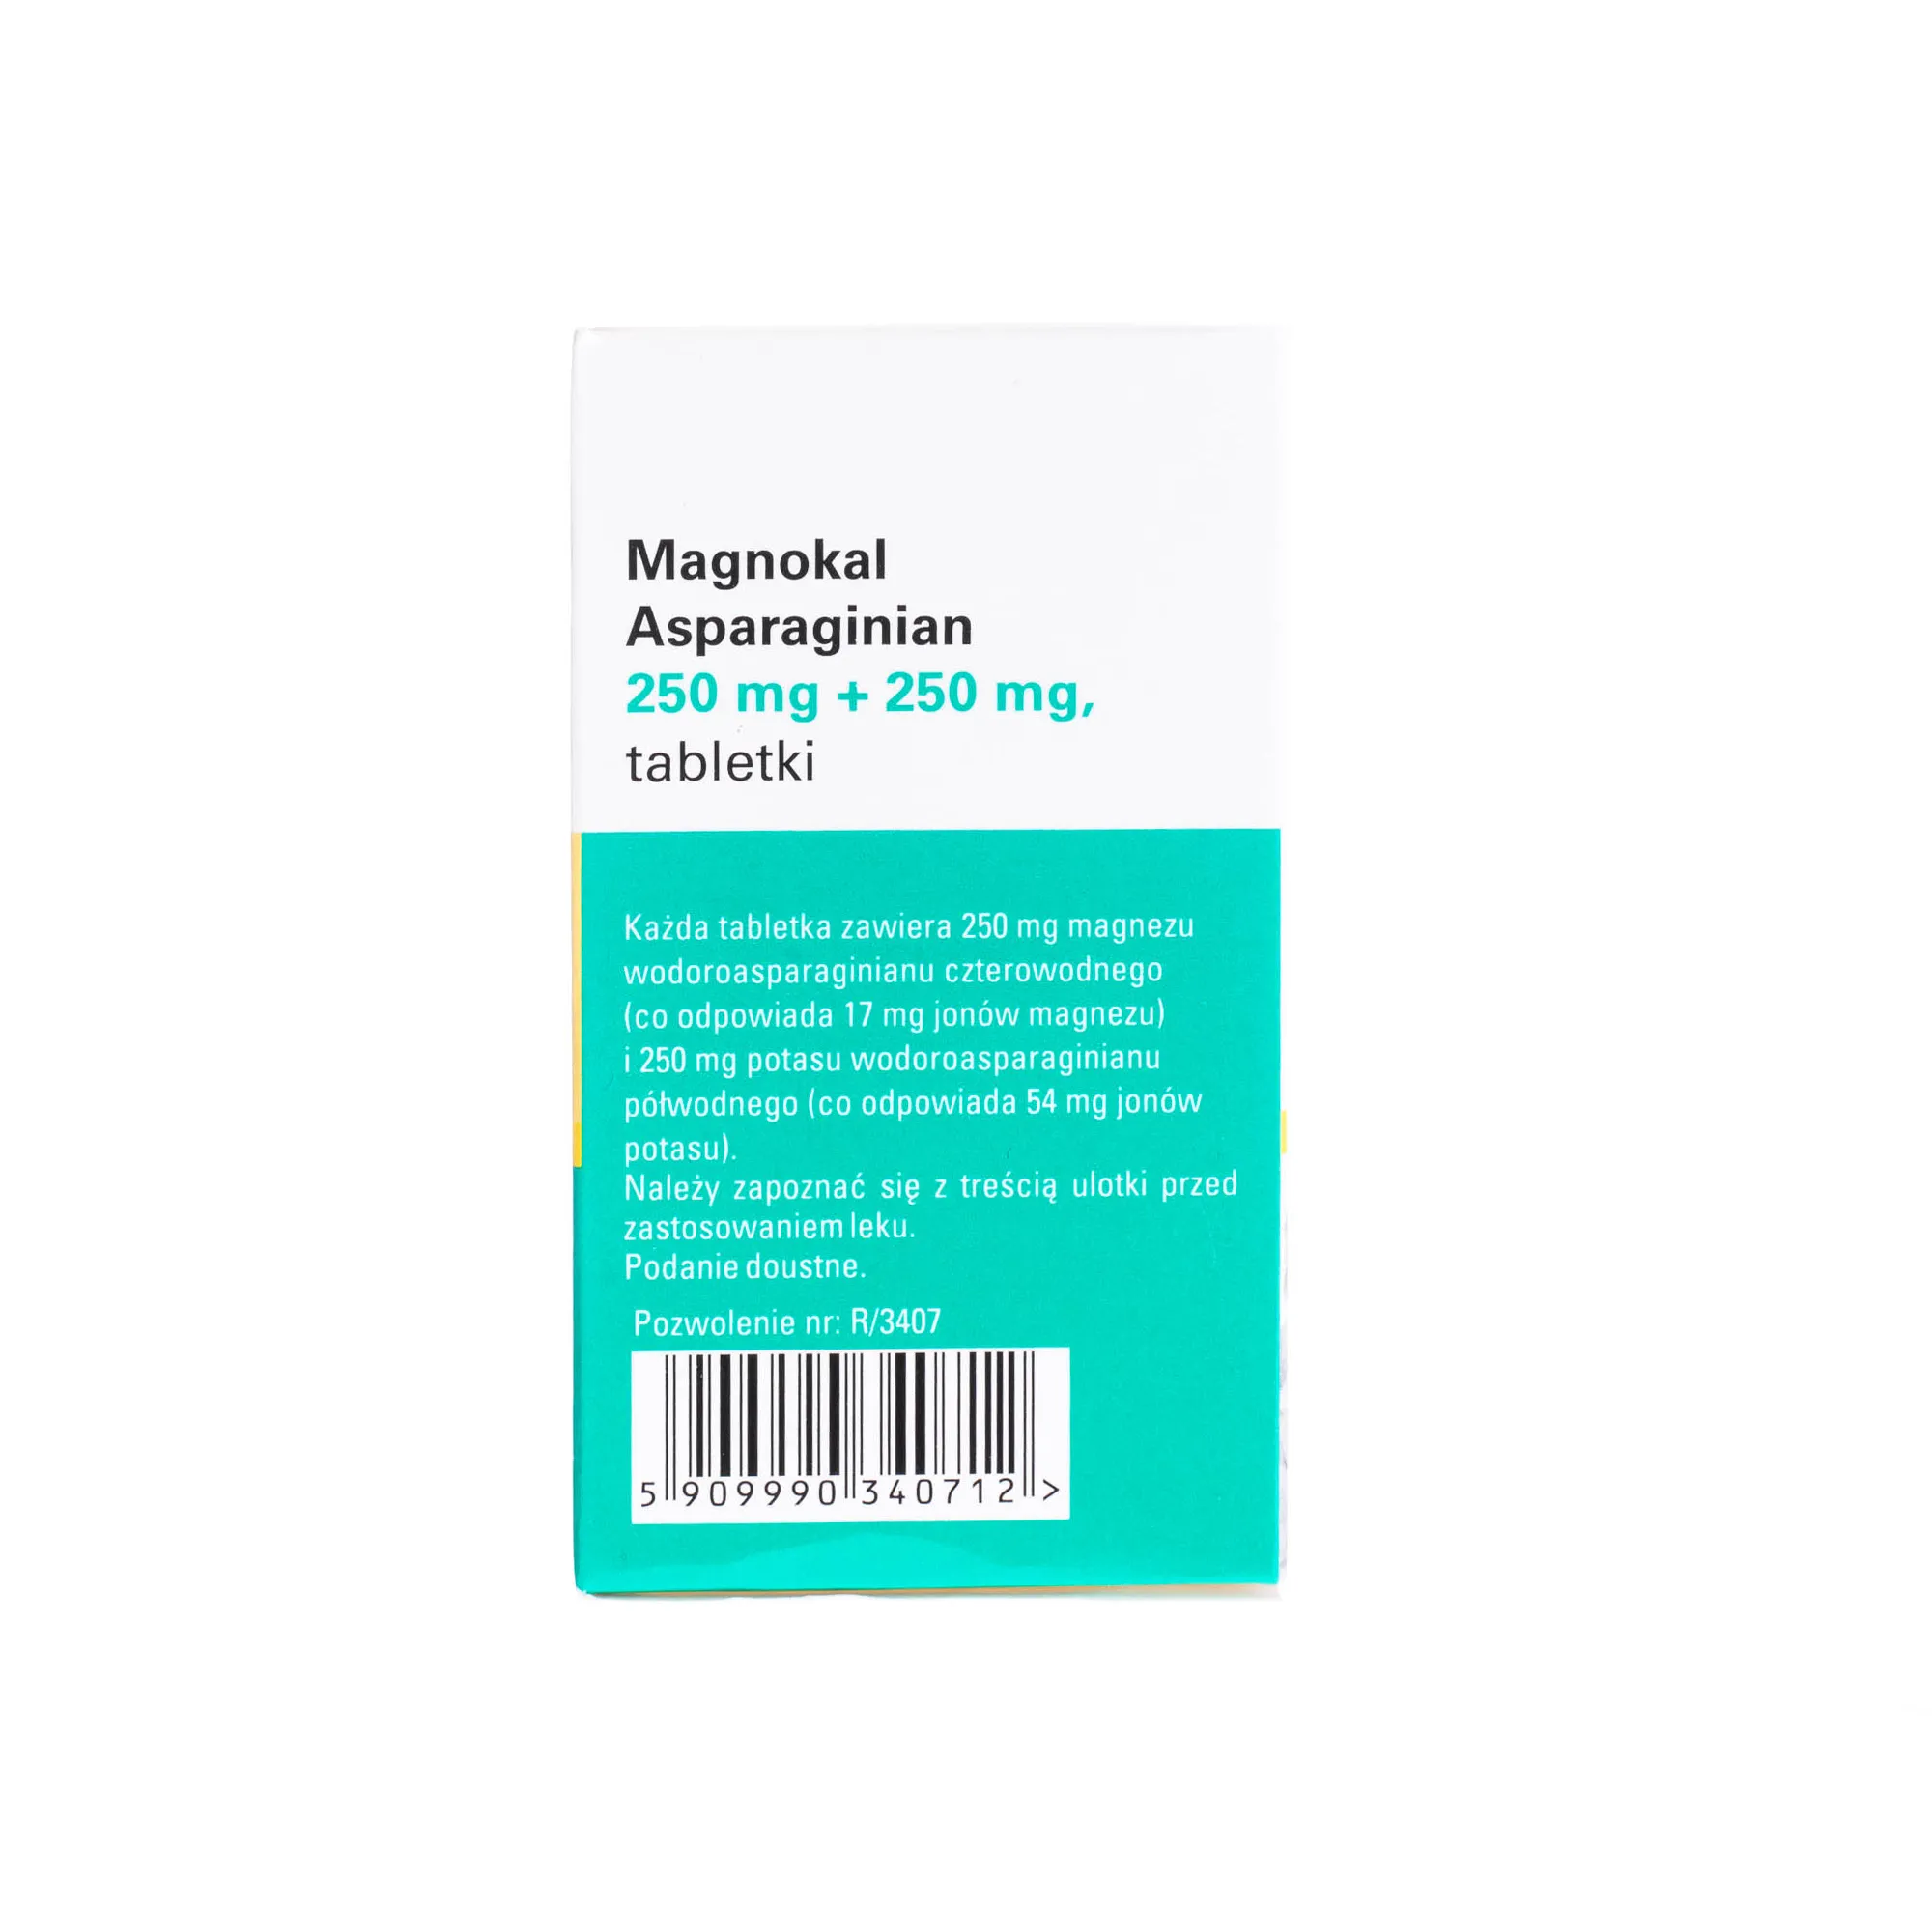 Magnokal Asparaginian, 250 mg + 250 mg, 50 tabletek 